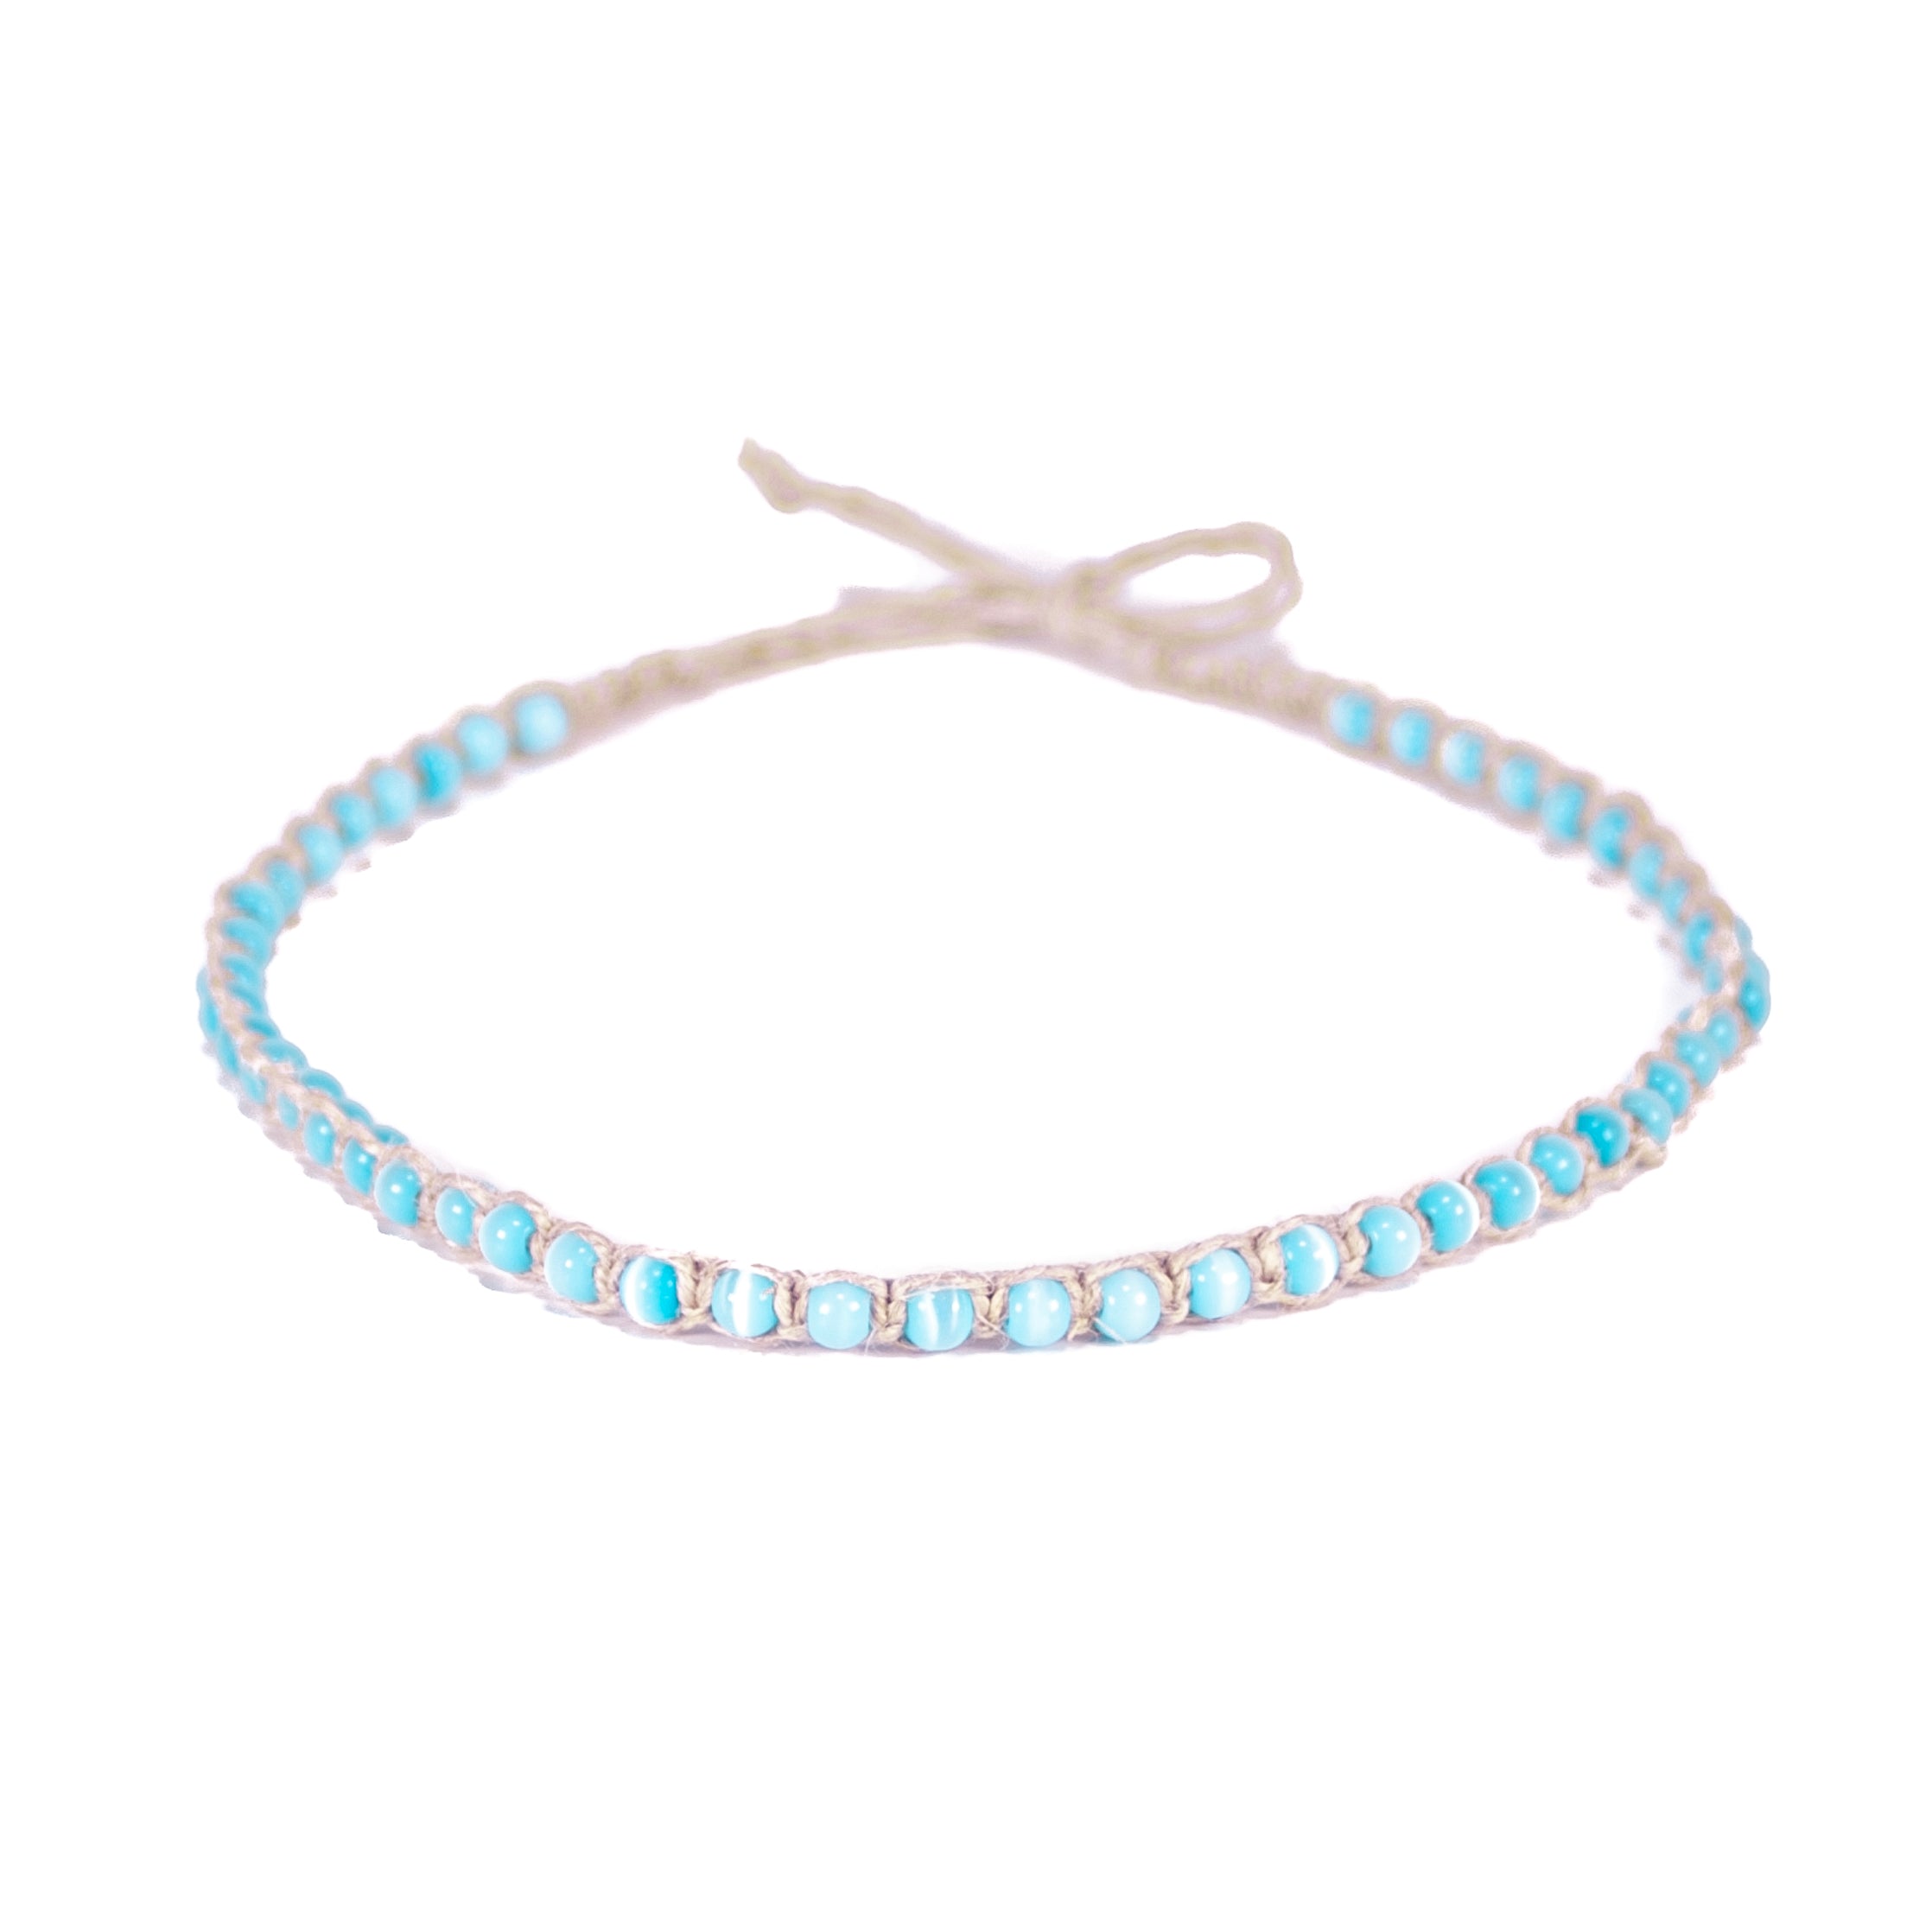 Light Blue Cat's Eye Beads on Hemp Choker Necklace